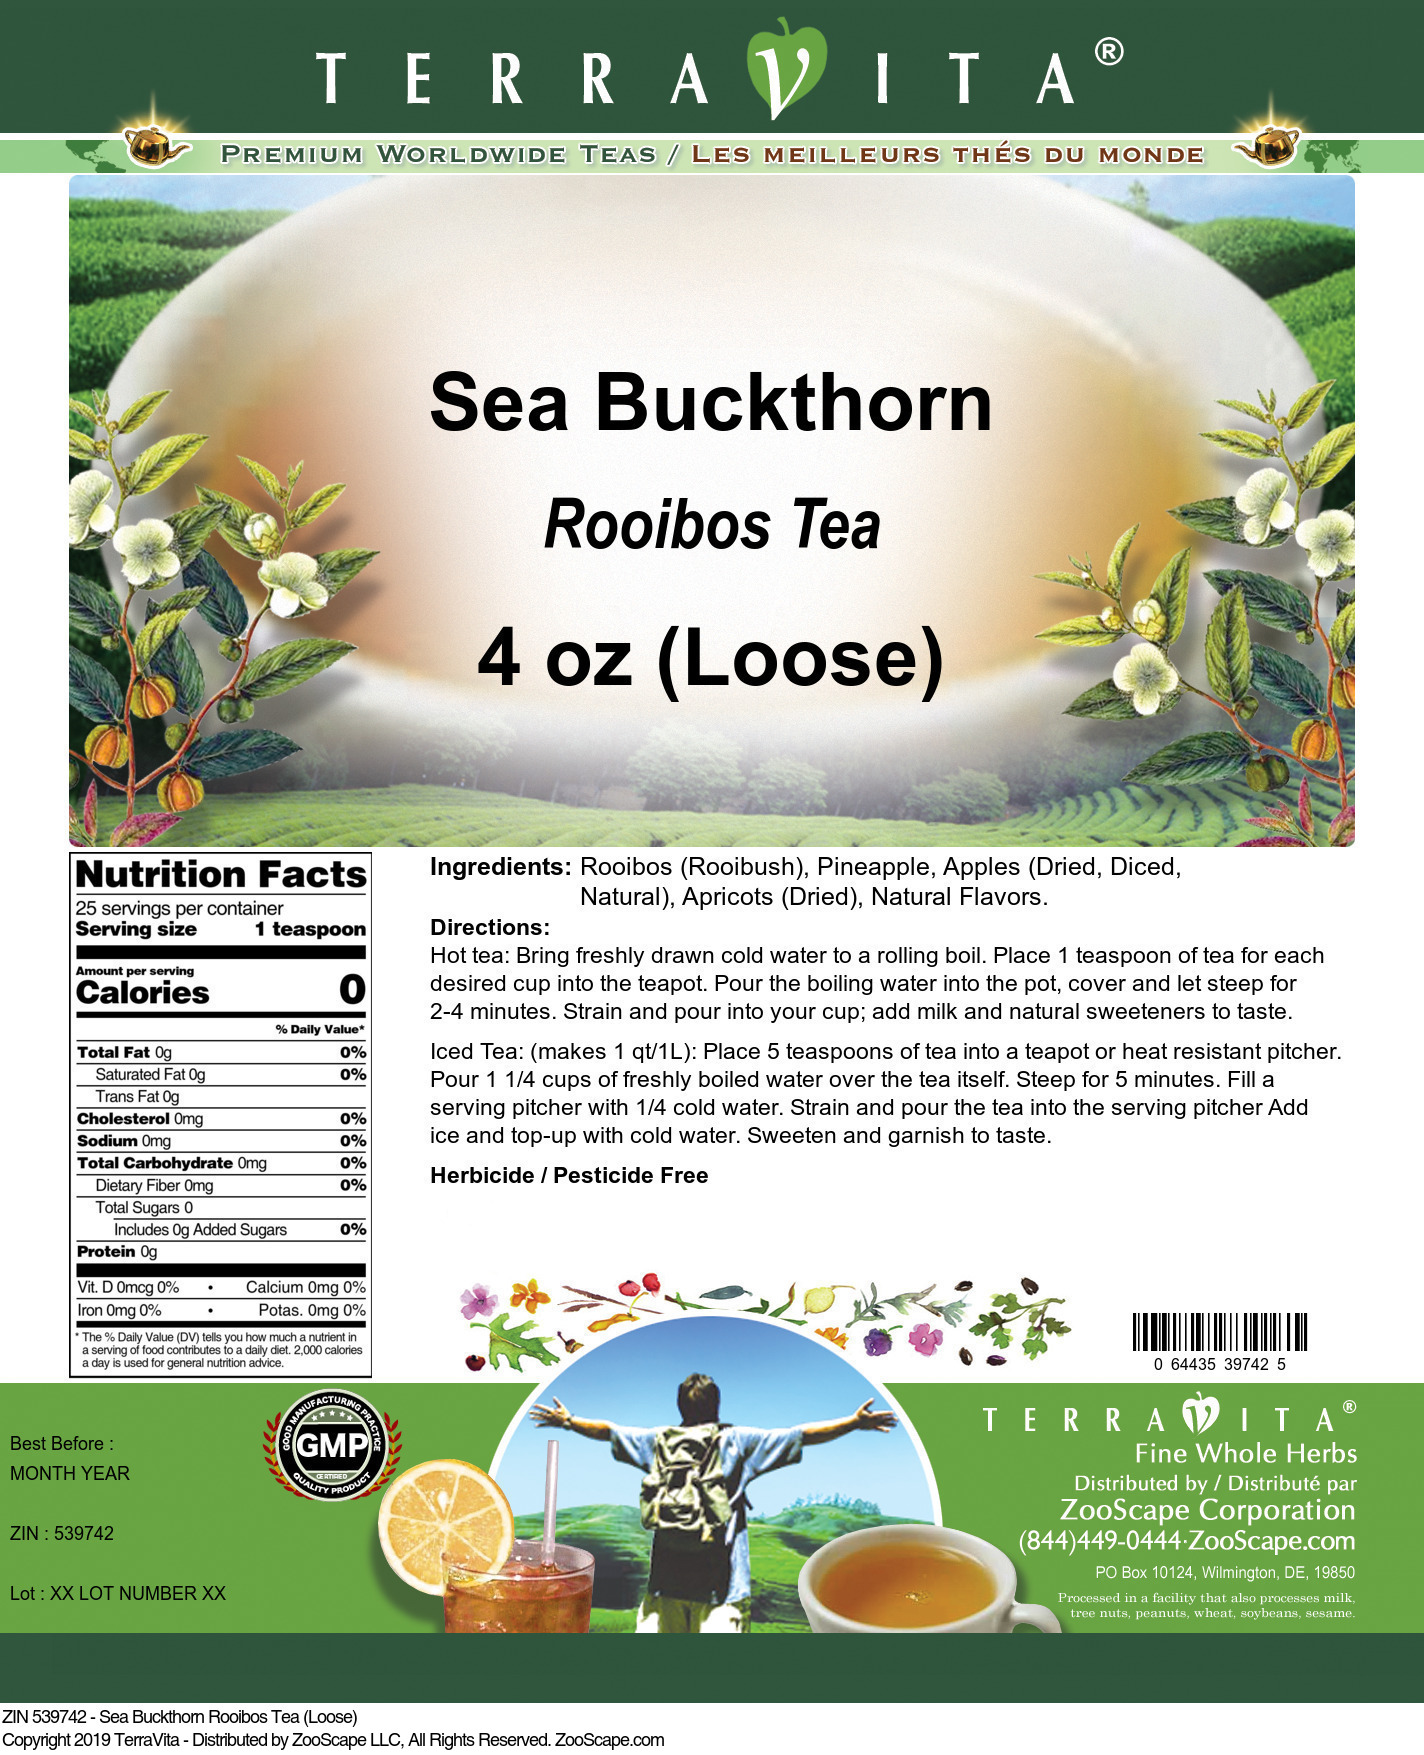 Sea Buckthorn Rooibos Tea (Loose) - Label